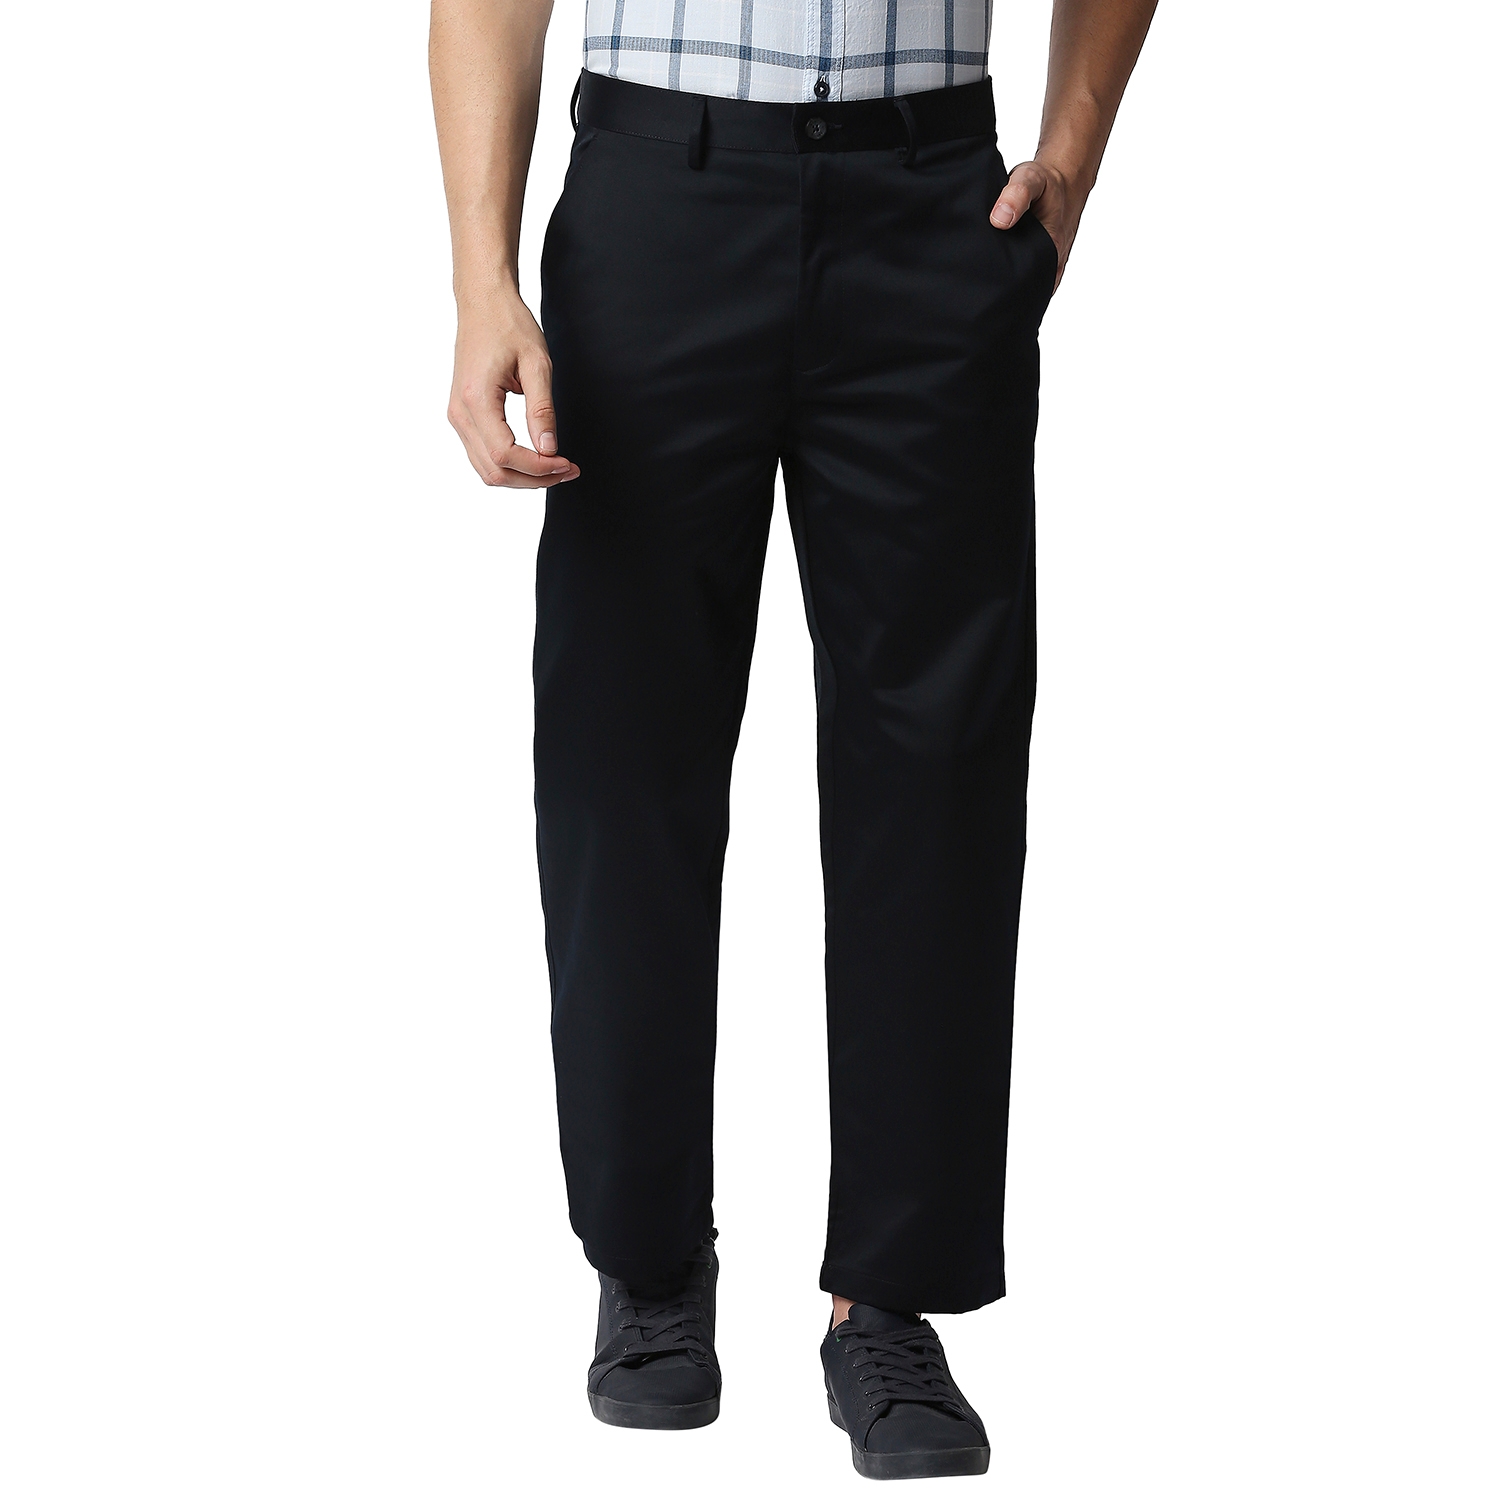 Basics | Basics Comfort Fit Navy Satin Weave Poly Cotton Trousers